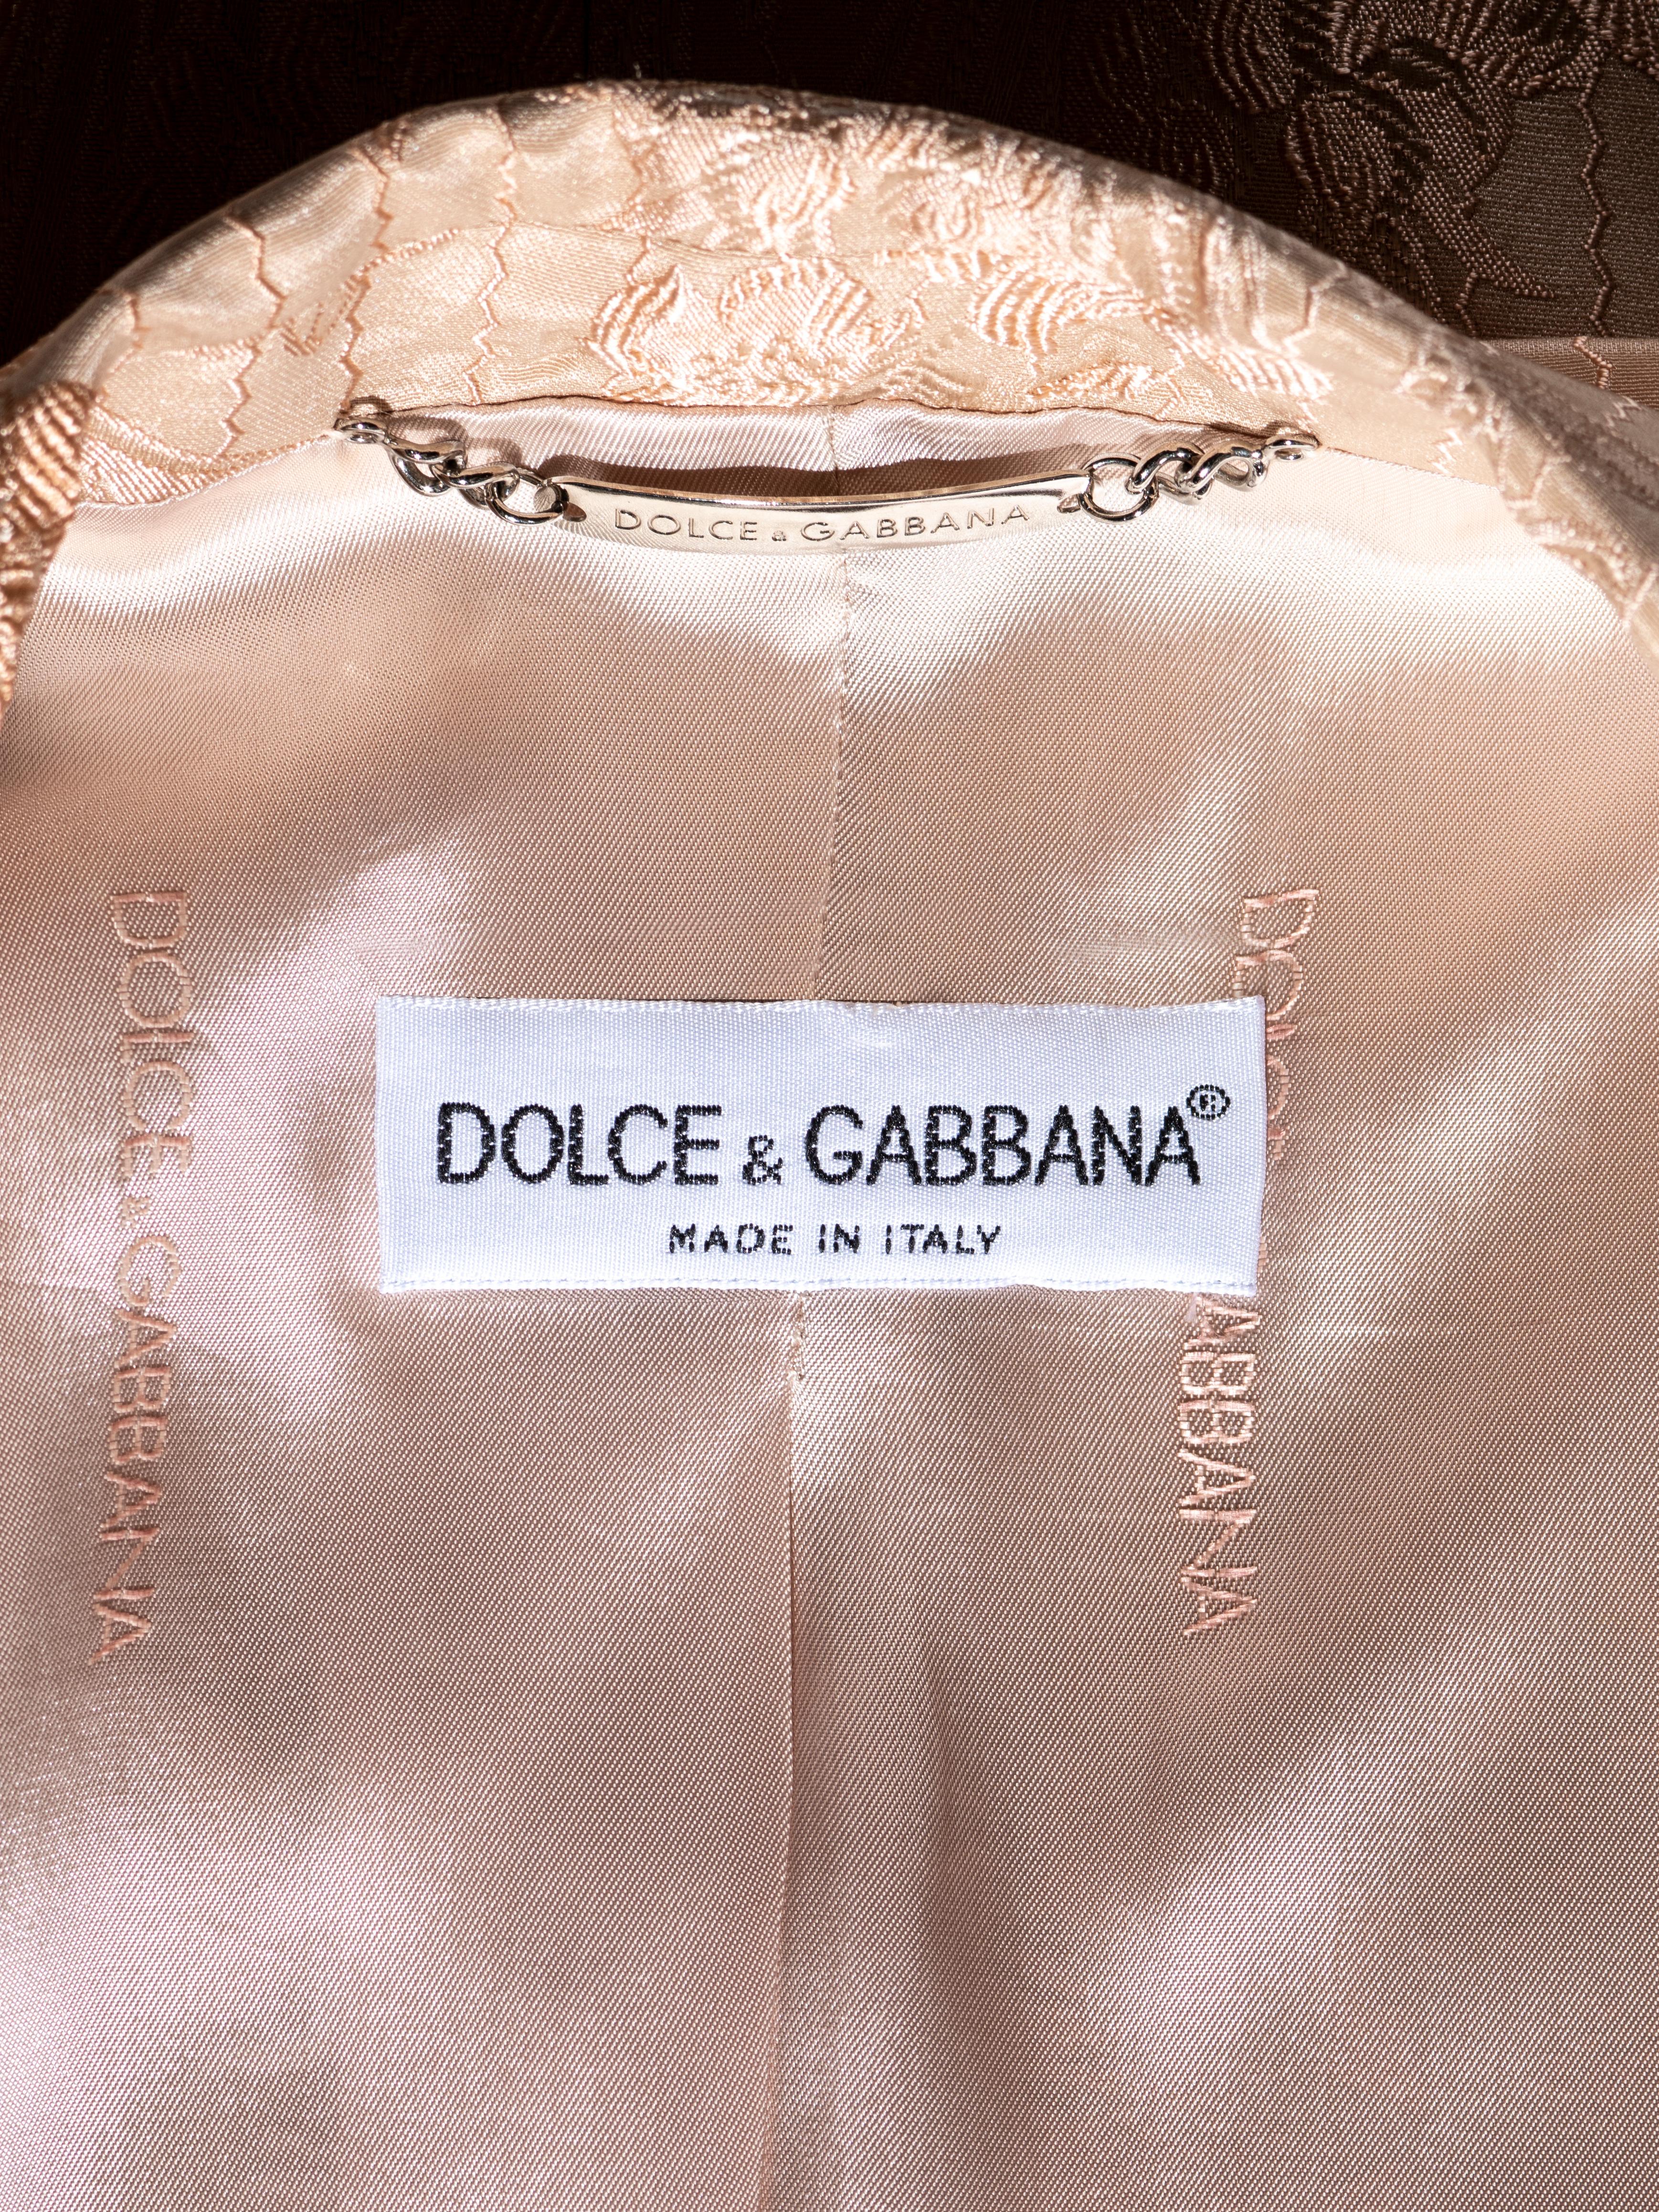 Dolce & Gabbana silk viscose floral brocade pant suit, ss 1997 5